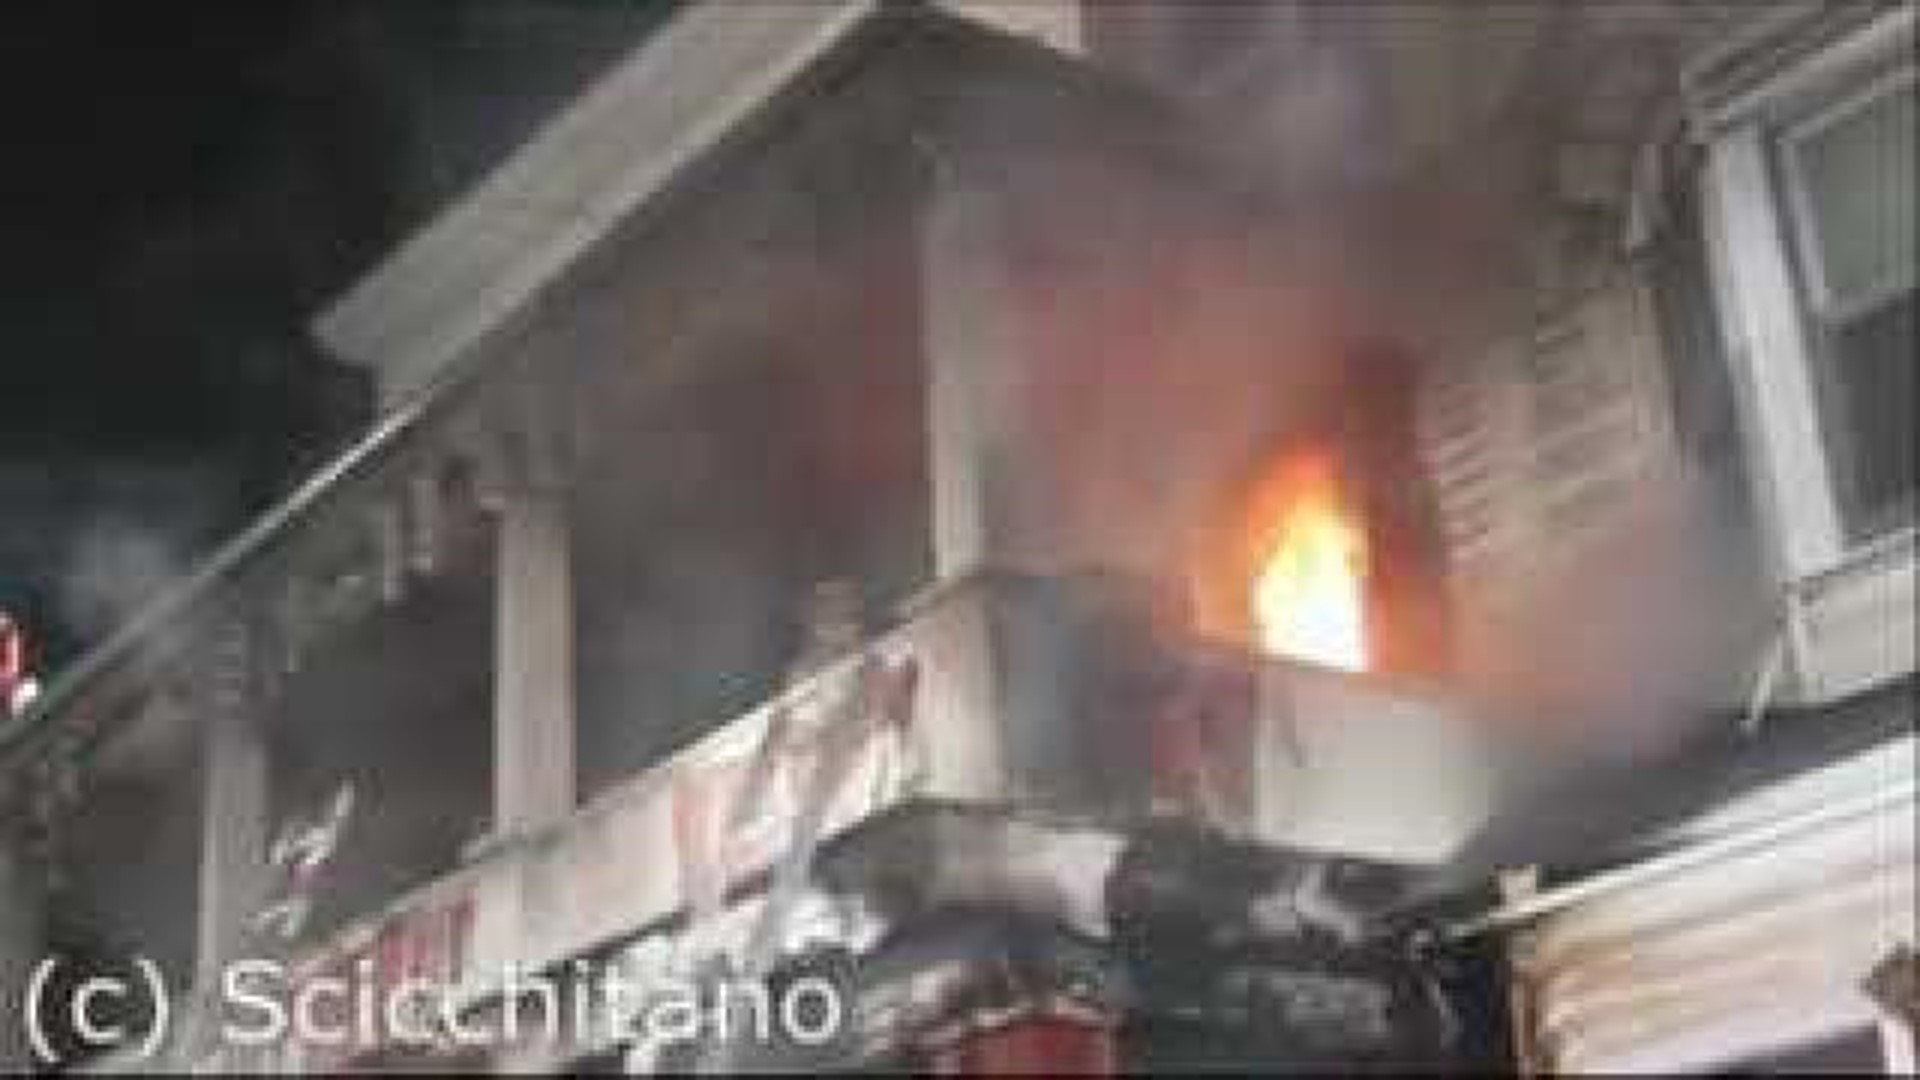 Home Video of Shamokin Fire